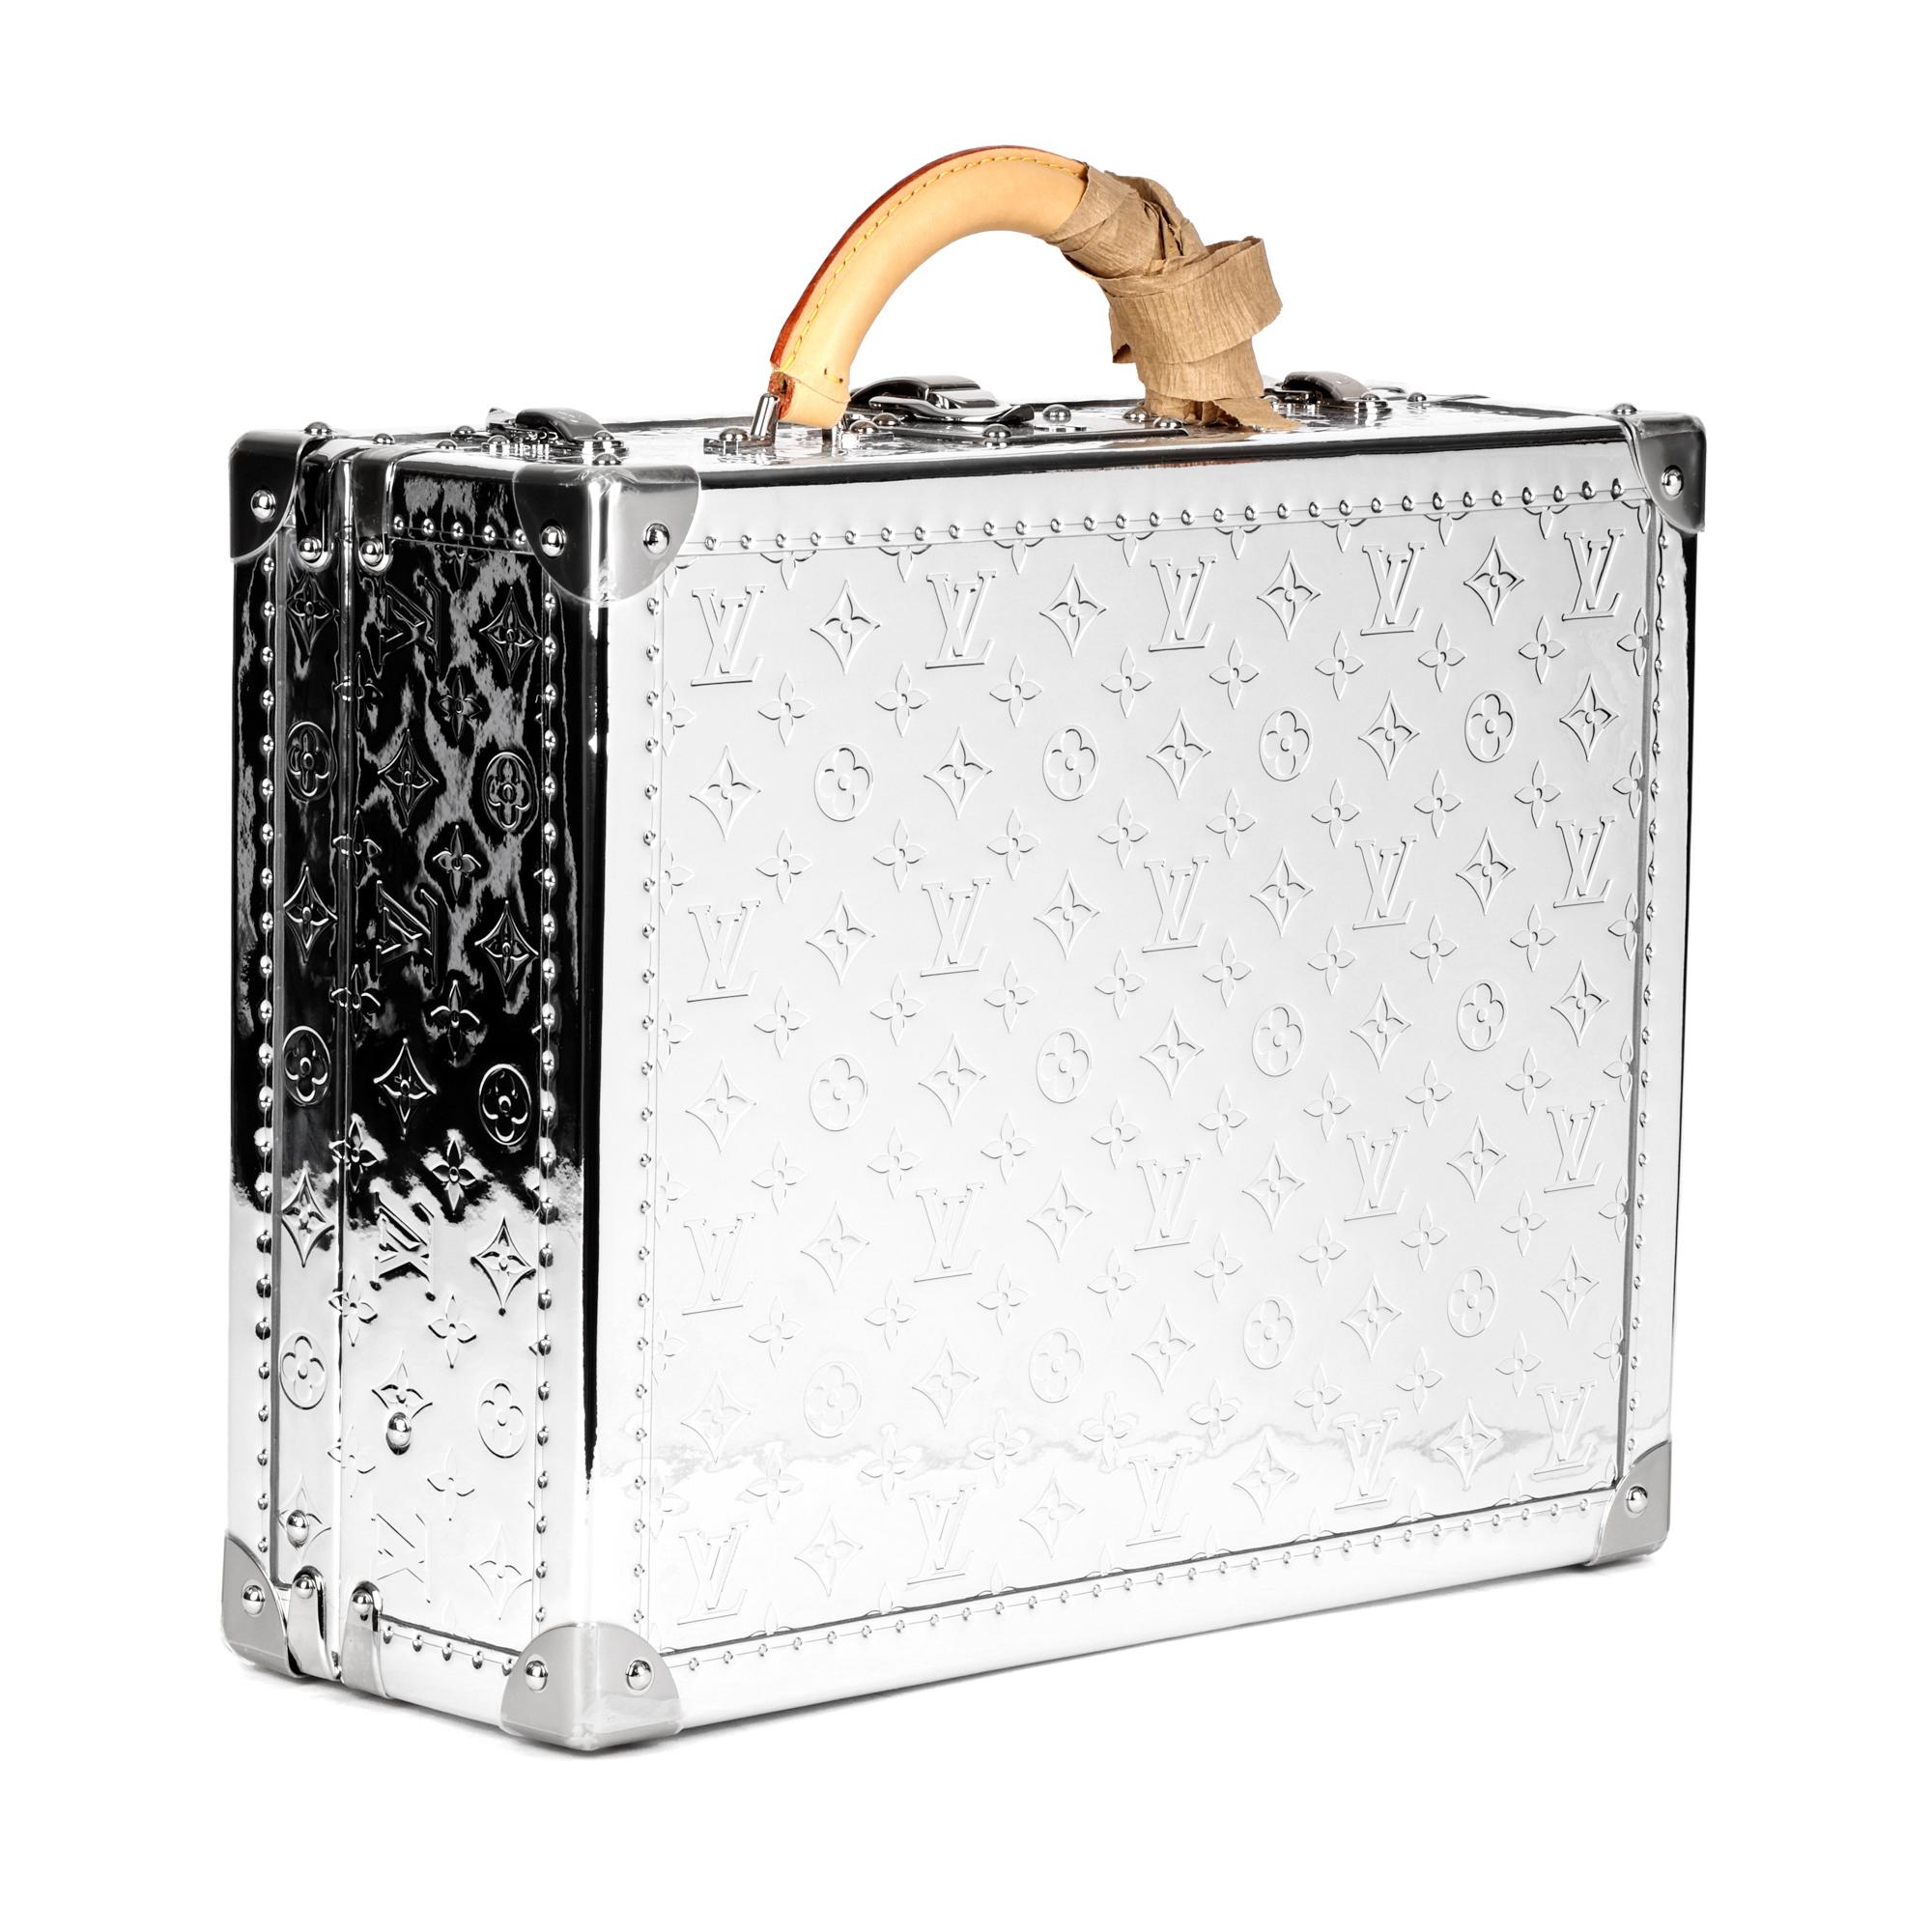 Authenticated Used Louis Vuitton Cotoville 40 Monogram Trunk Hard Case  Attache Bag Brown Gold Hardware LOUIS VUITTON 